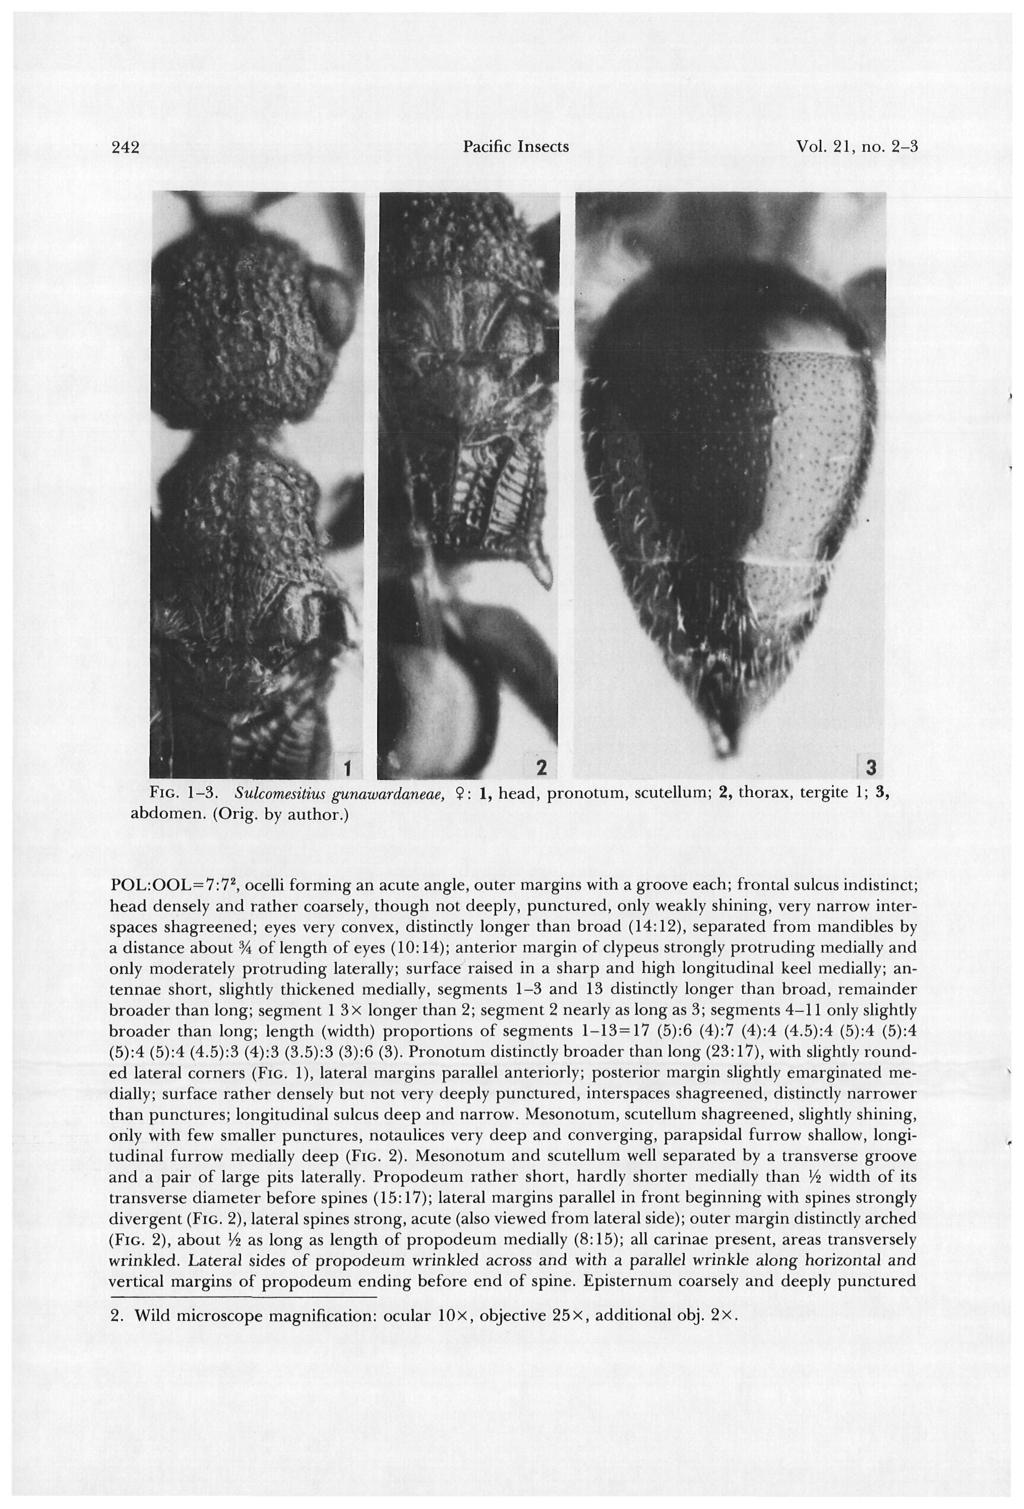 242 Pacific Insects Vol. 21, no. 2-3 FIG. 1-3. Sulcomesitius gunawardaneae, 9: 1, head, pronotum, scutellum; 2, thorax, tergite 1; 3, abdomen. (Orig. by author.